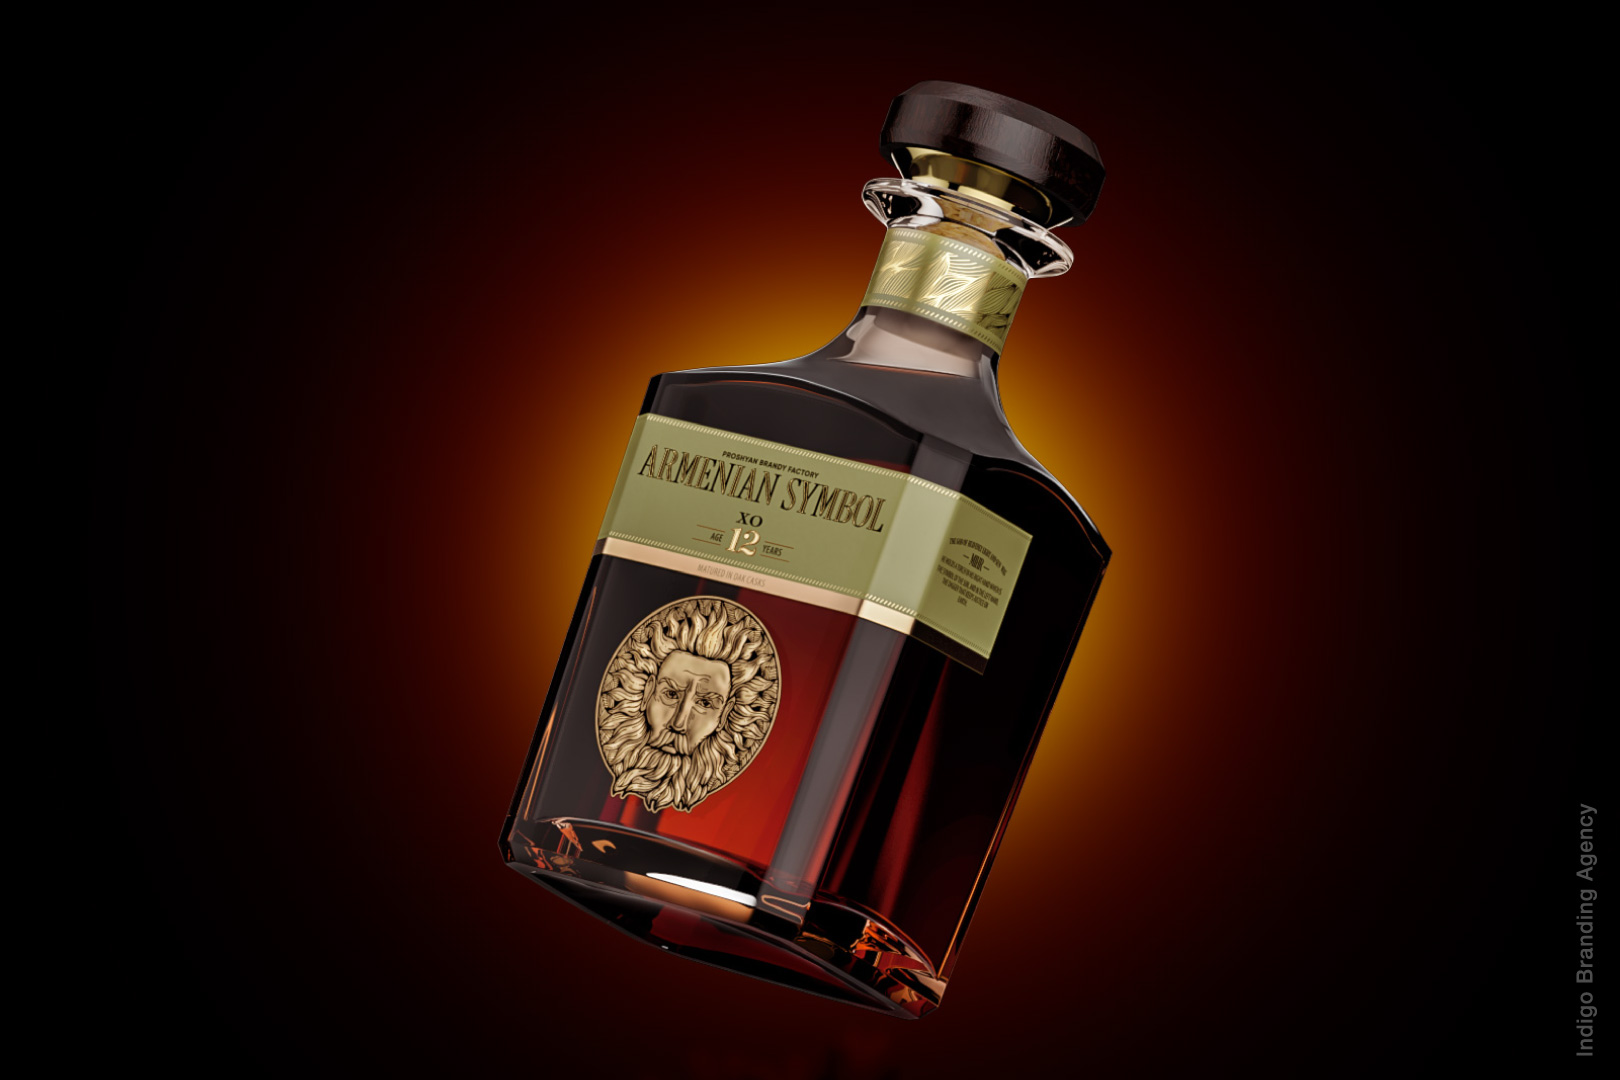 Armenian Symbol brandy branding and labeling design by Indigo branding